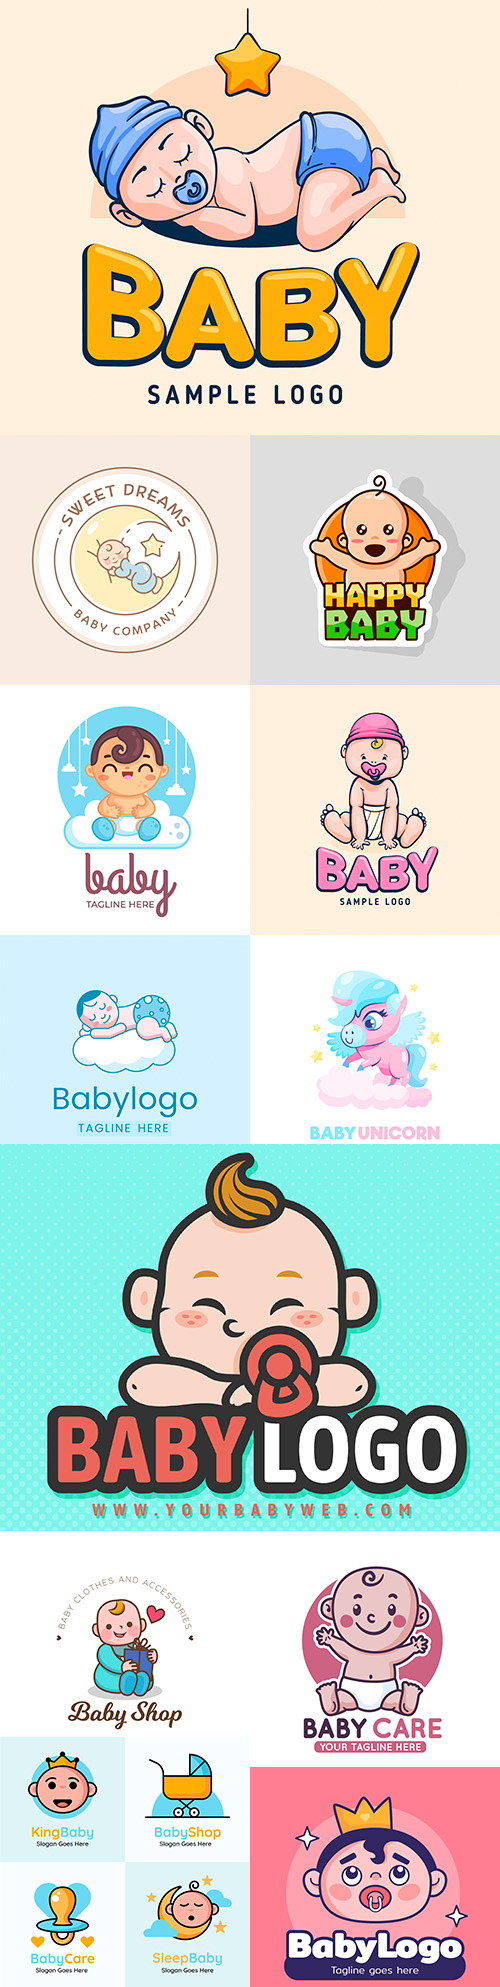 Baby brand name company logos corporate design
